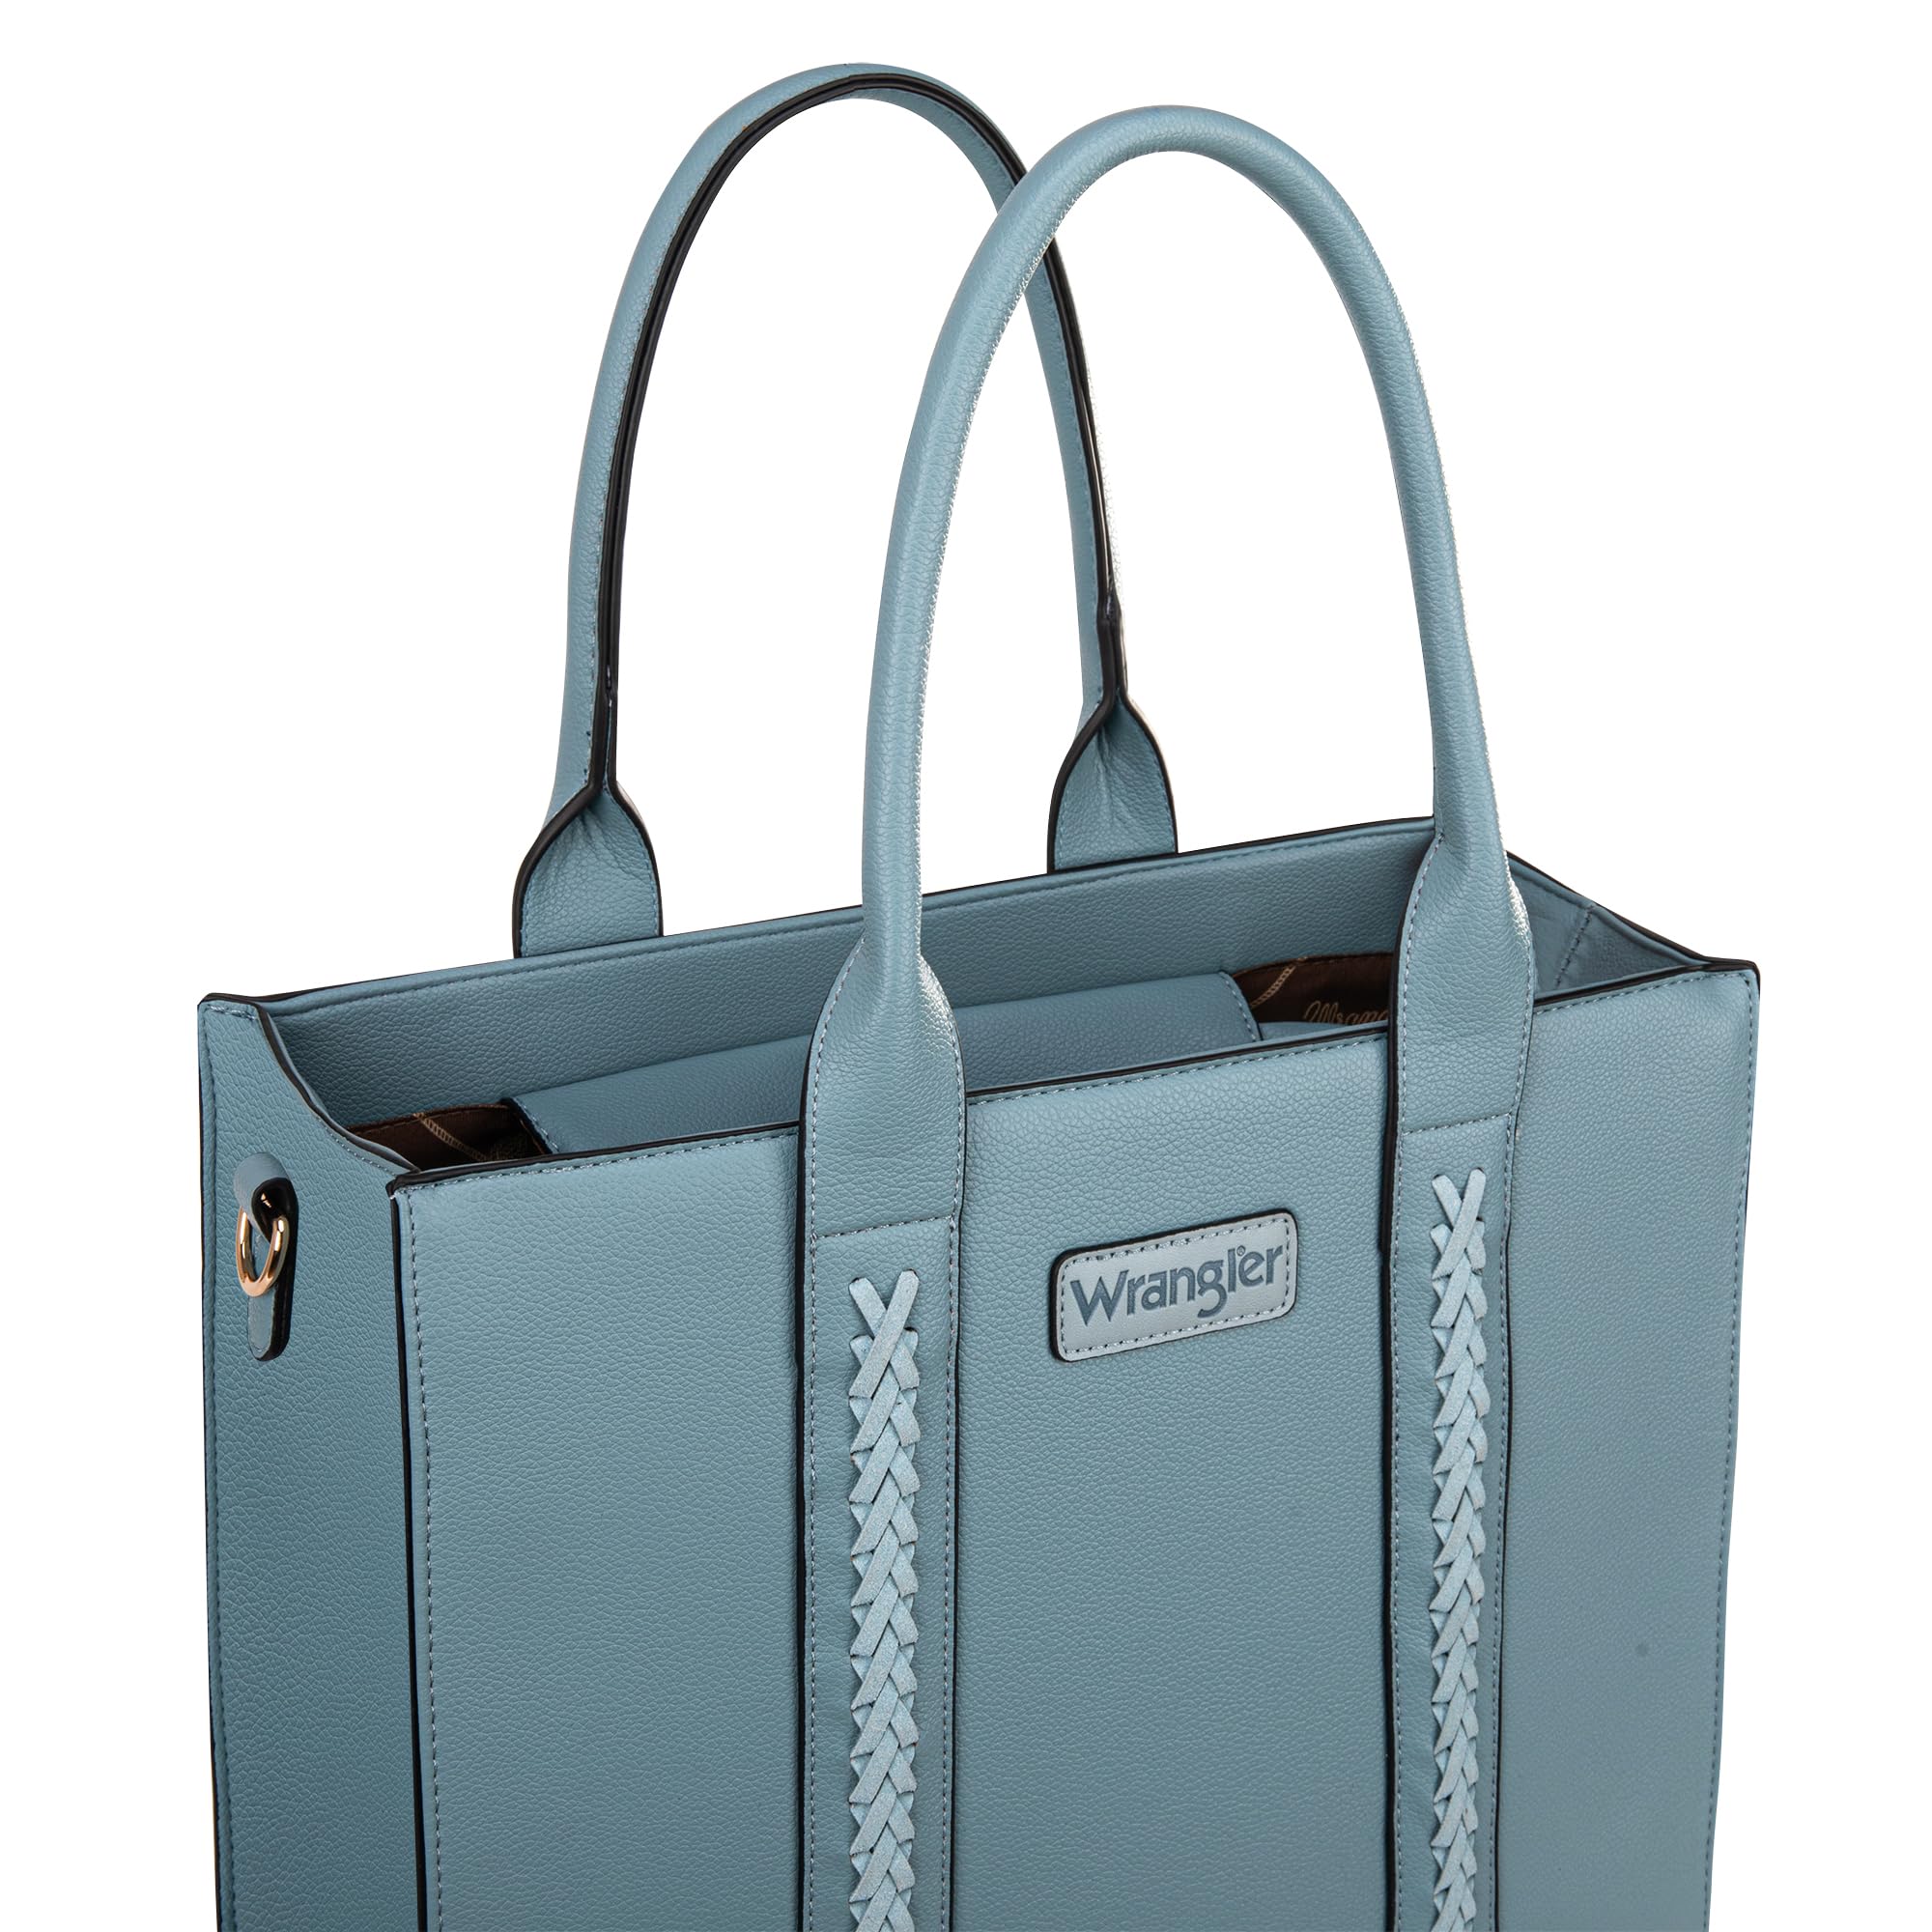 Wrangler Tote Bag for Women Zipper Shoulder Handbag